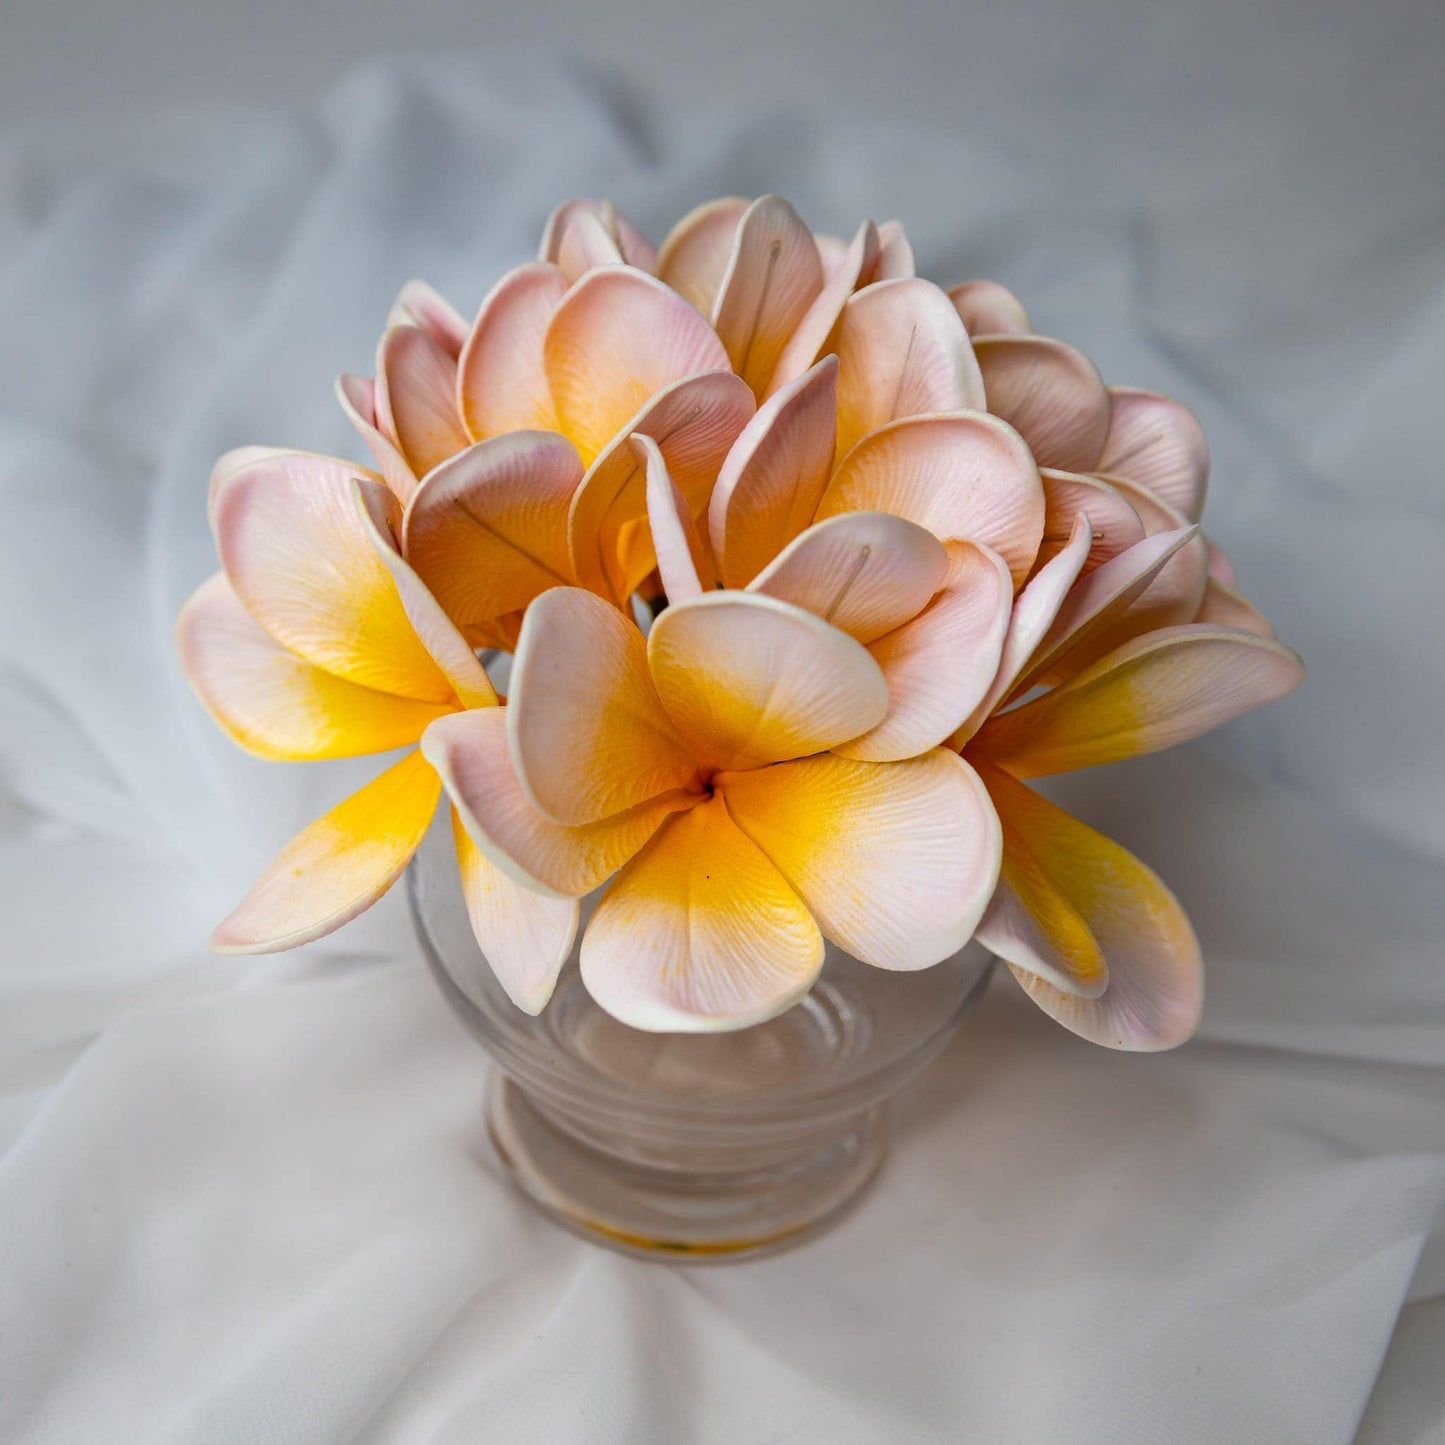 Pale Orchid Frangipani Flowerhead - Realistic Artificial Flowers